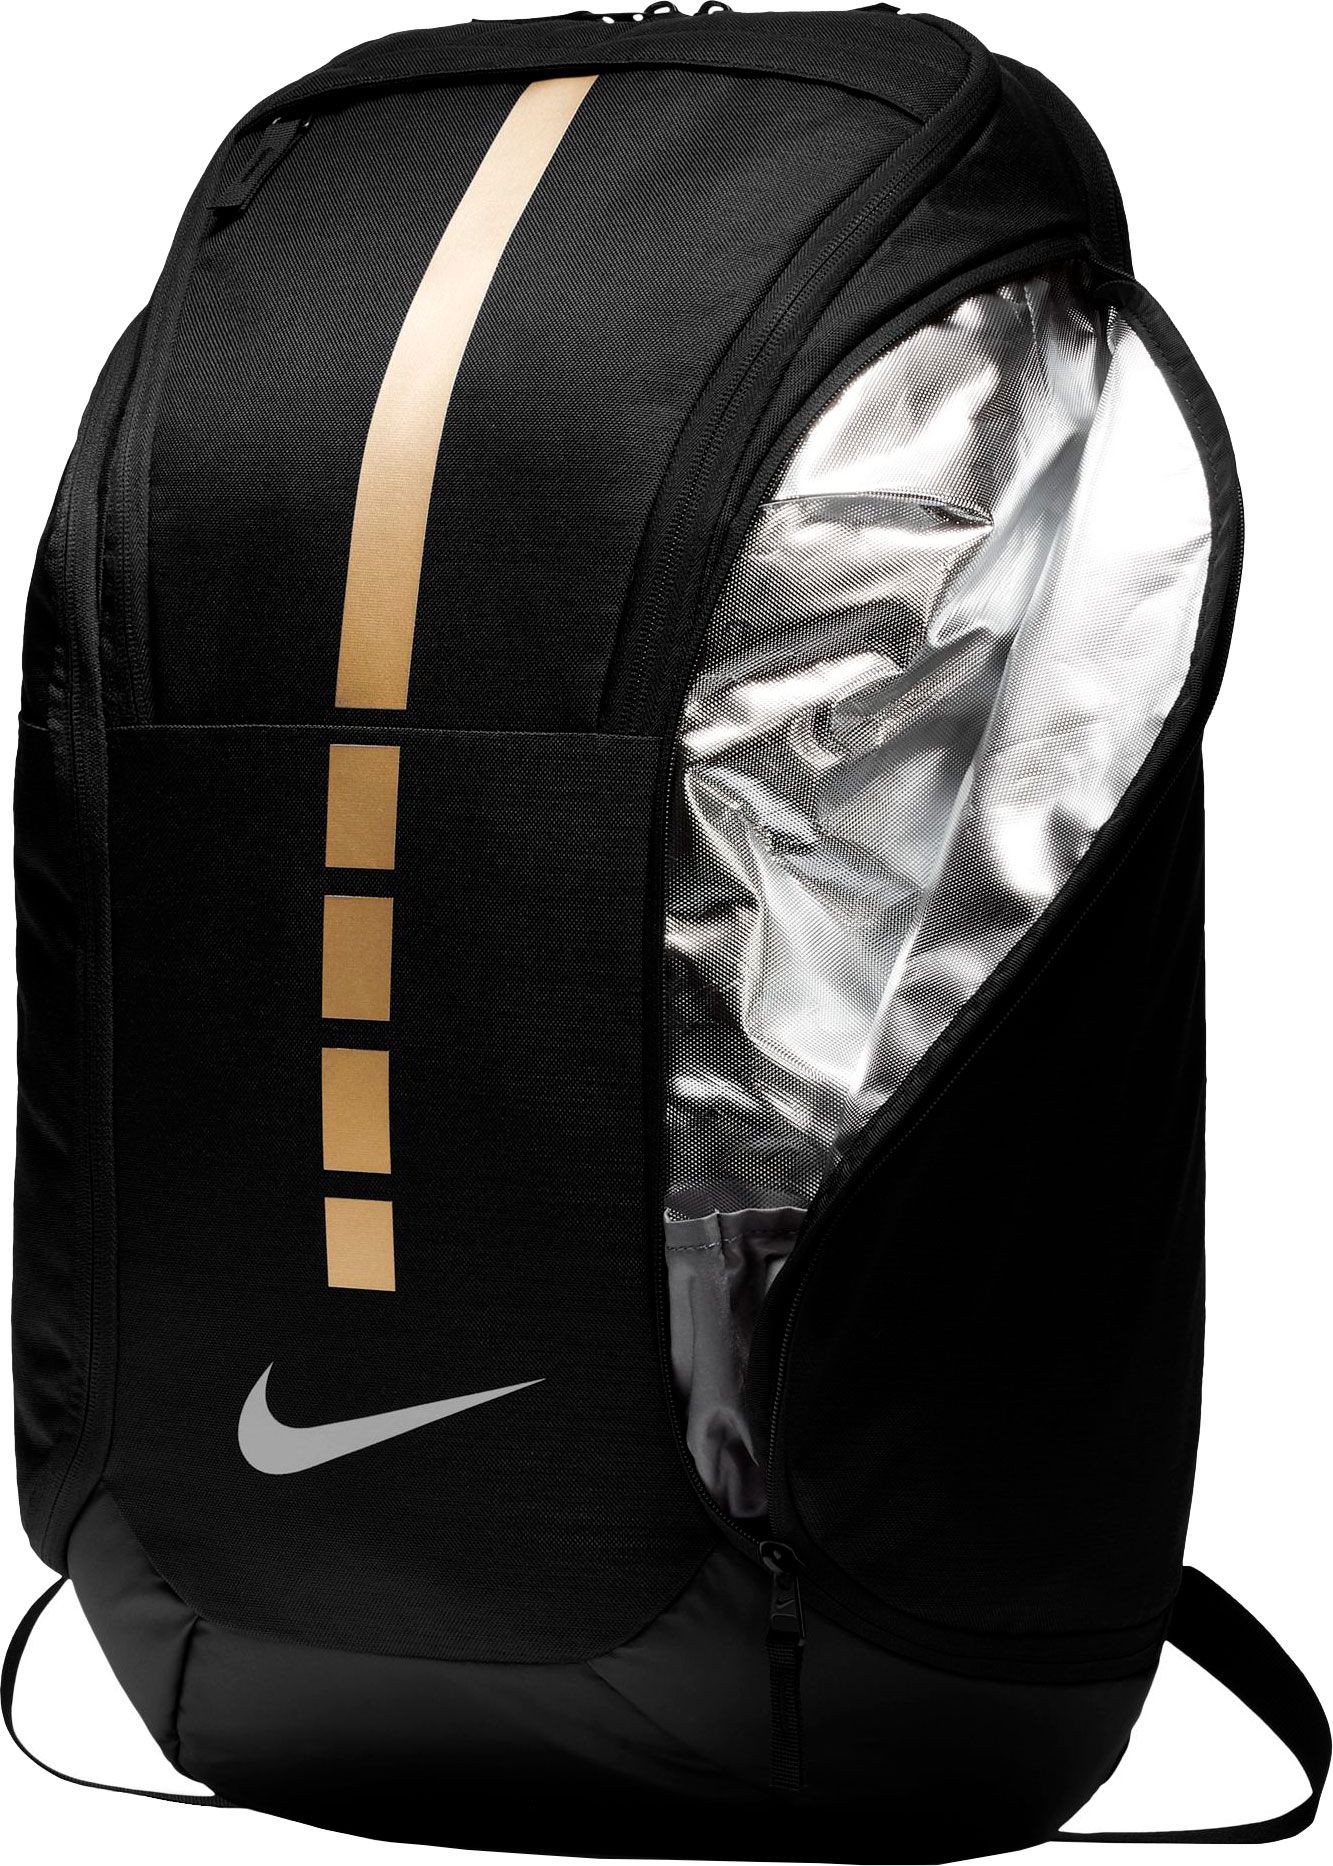 nike elite backpack 2.0 black and gold